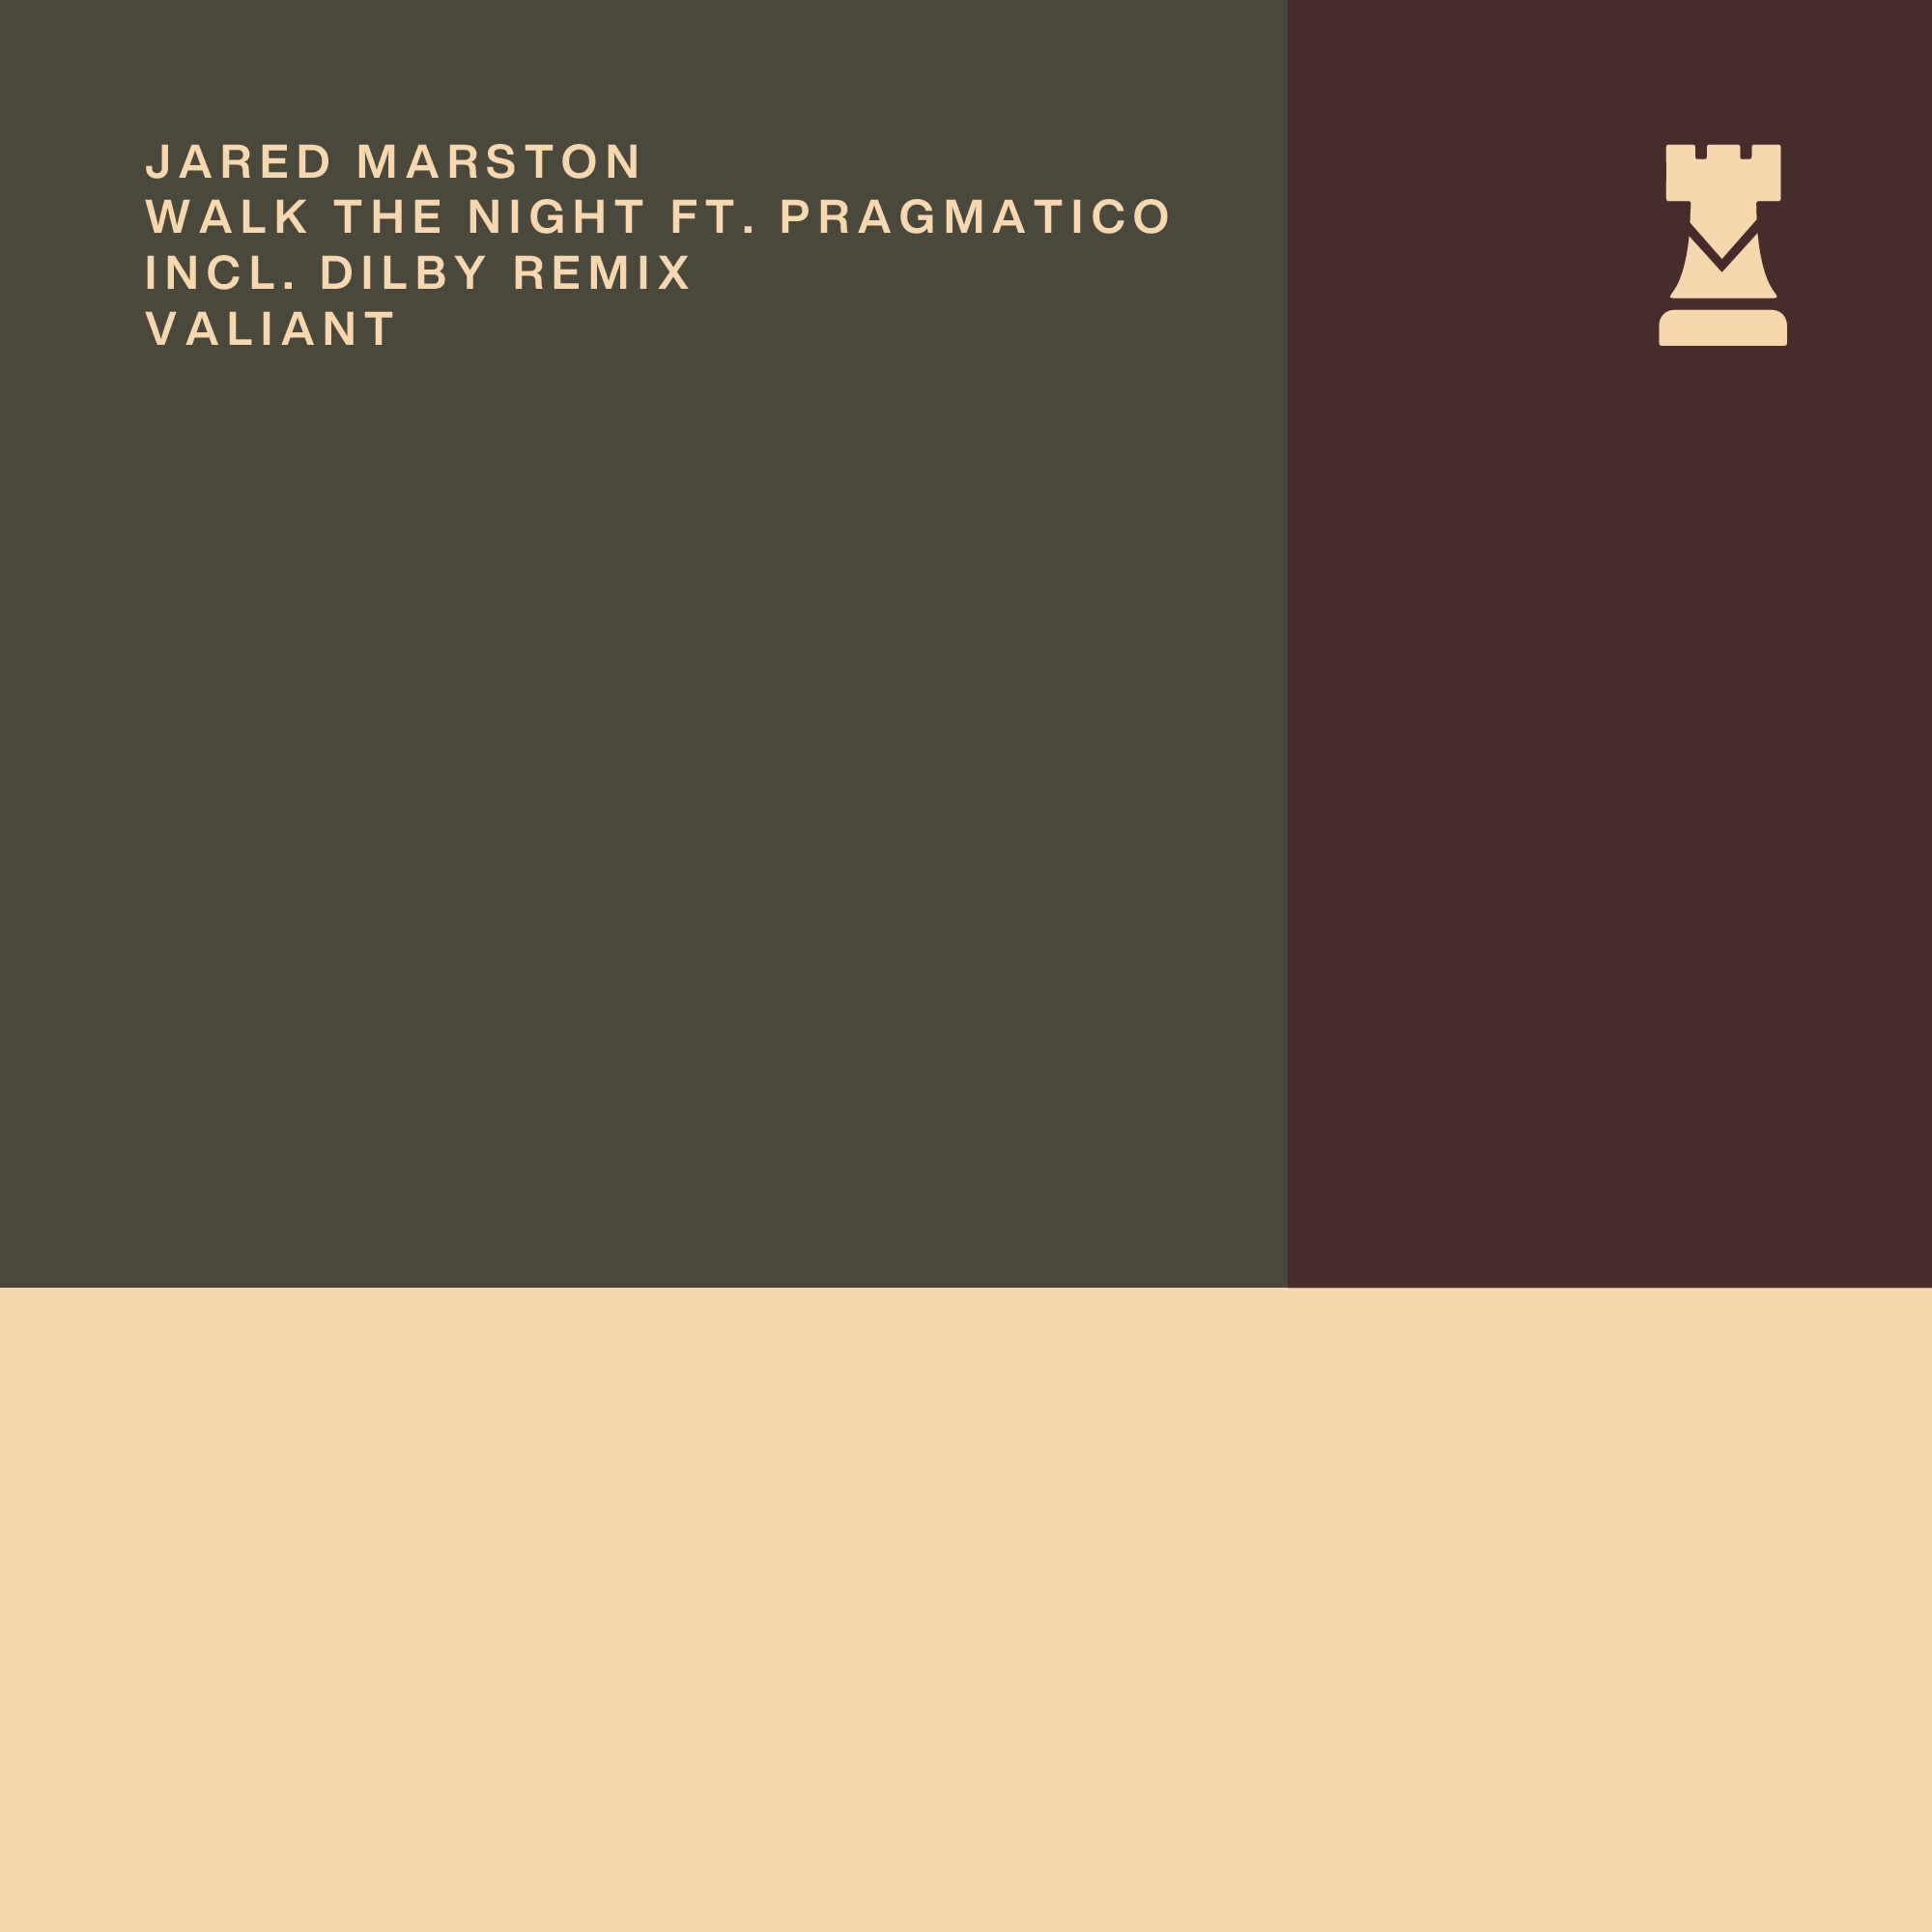 Jared Marston “Walk The Night” Dilby Remix